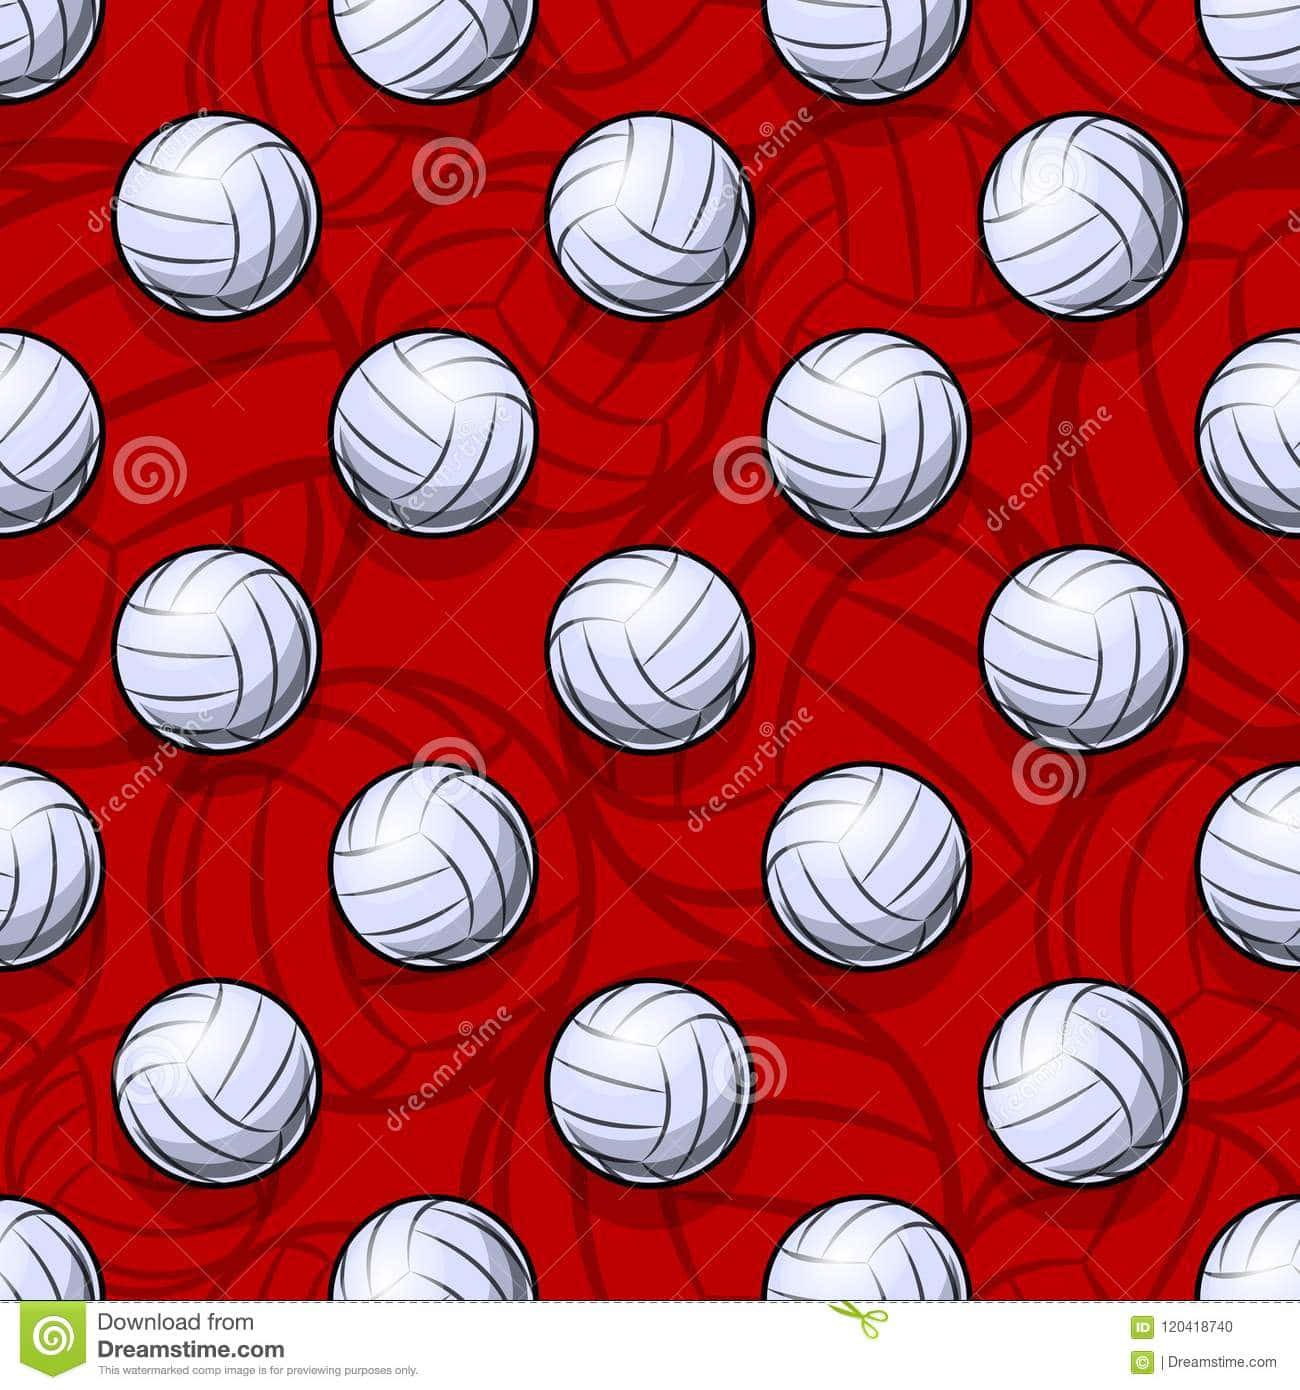 Perfectly-spun Volleyball Ball. Wallpaper